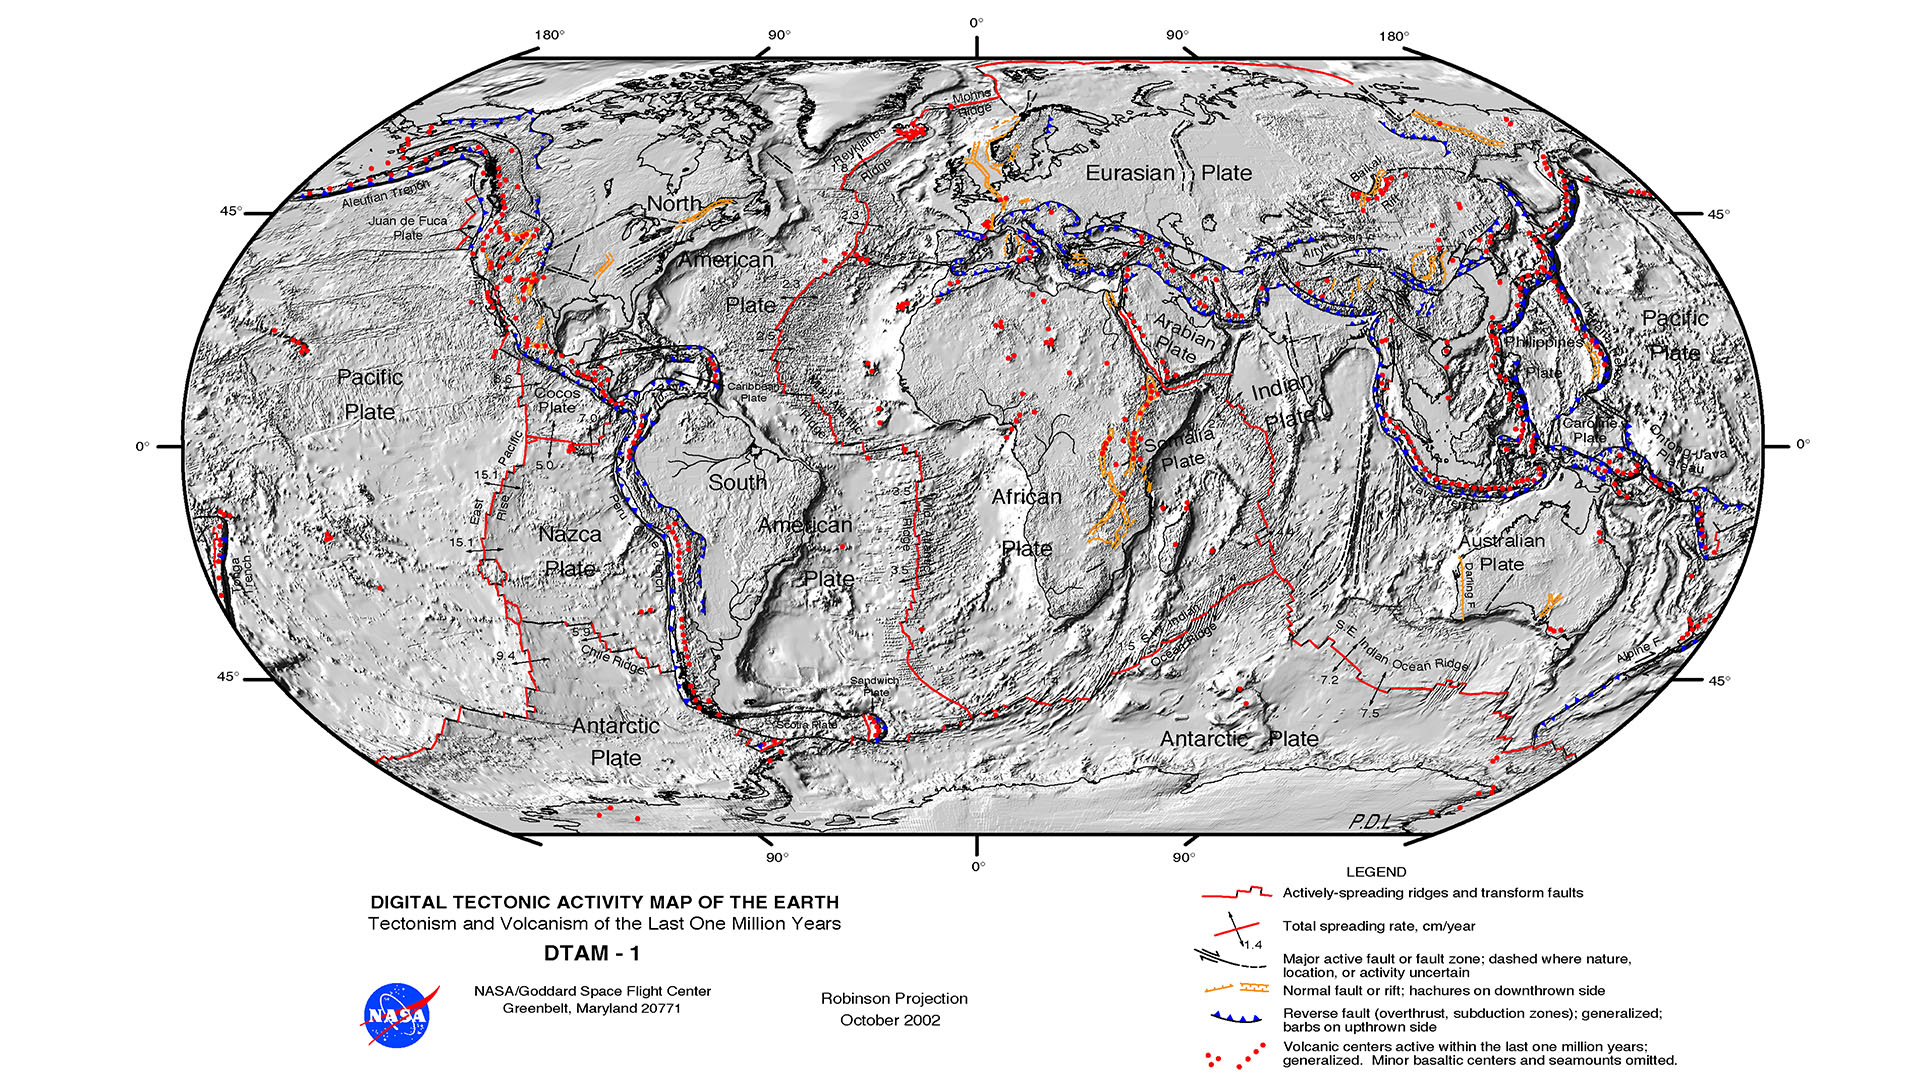 Digital Tectonic Activity Map of the Earth by NASA.